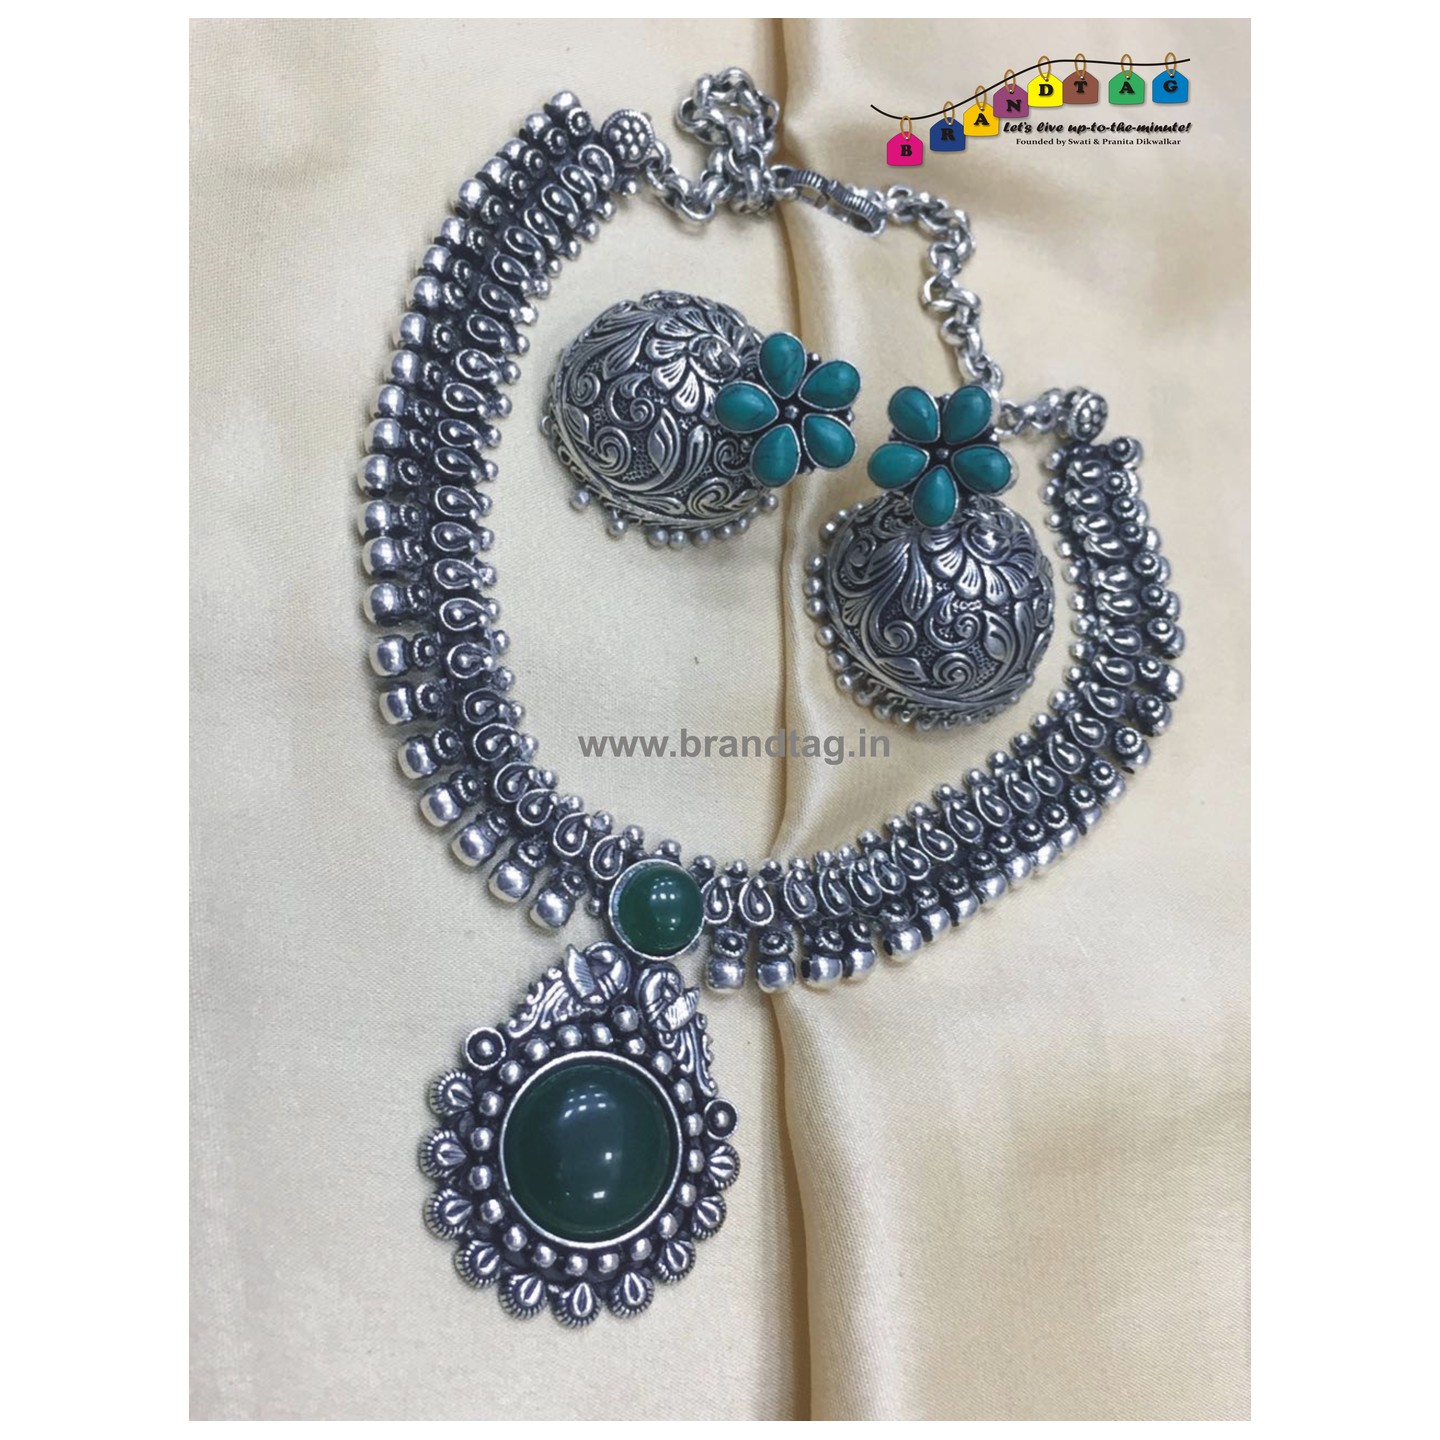 Beautiful Oxidized Necklace set!